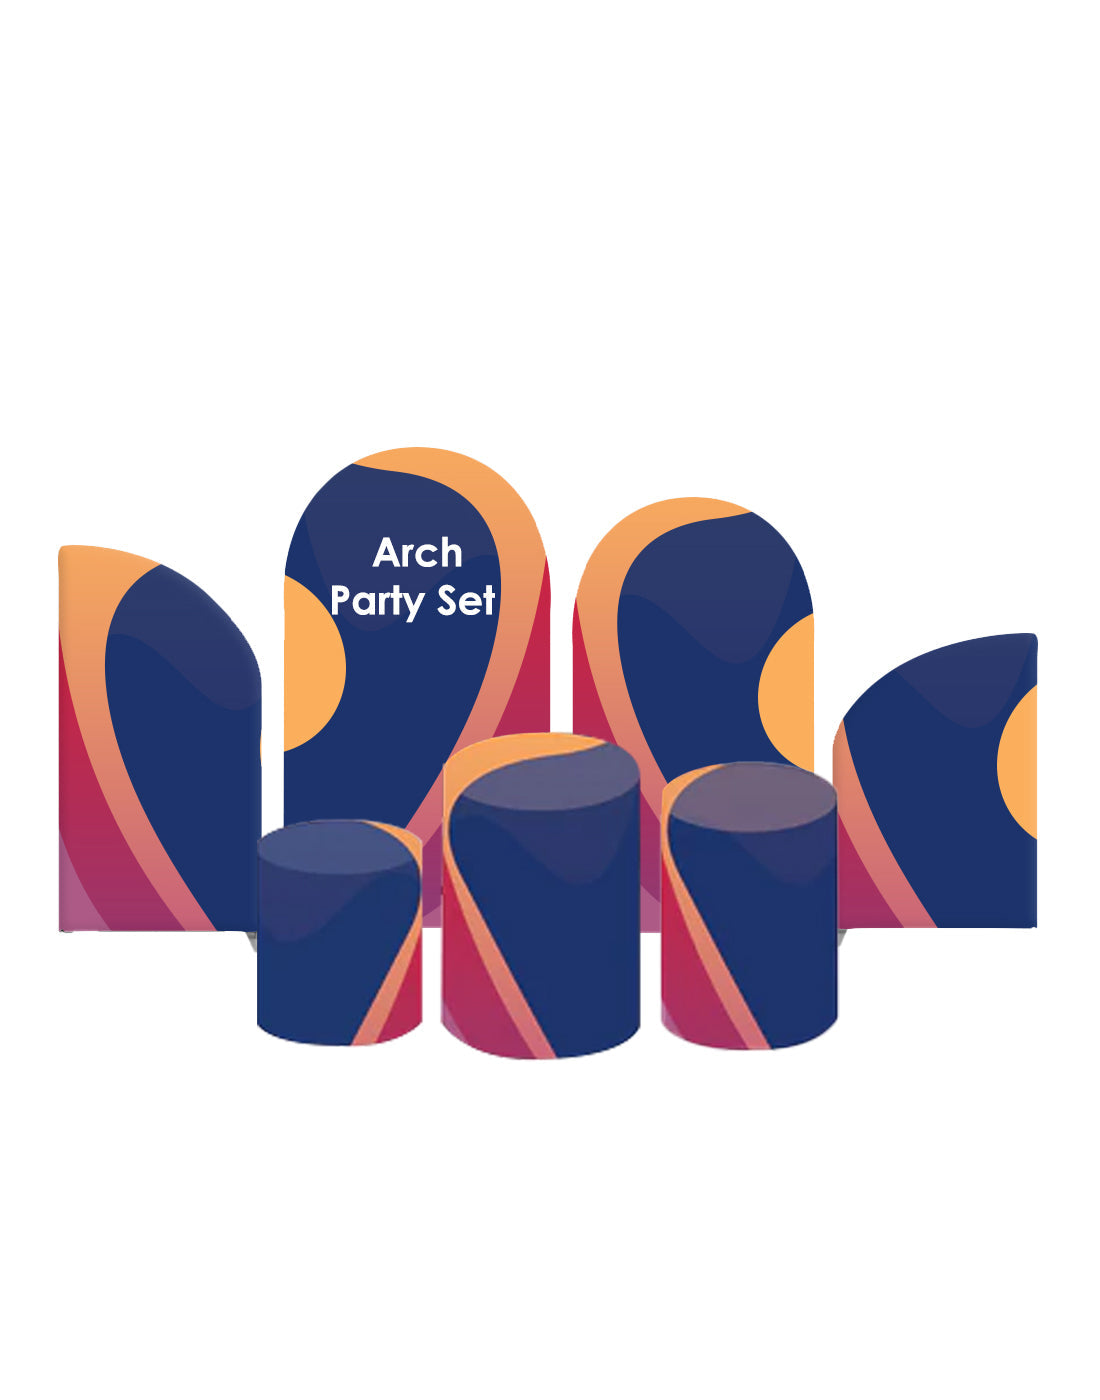 Arch Party Sets - 4 Paredes con Zócalo